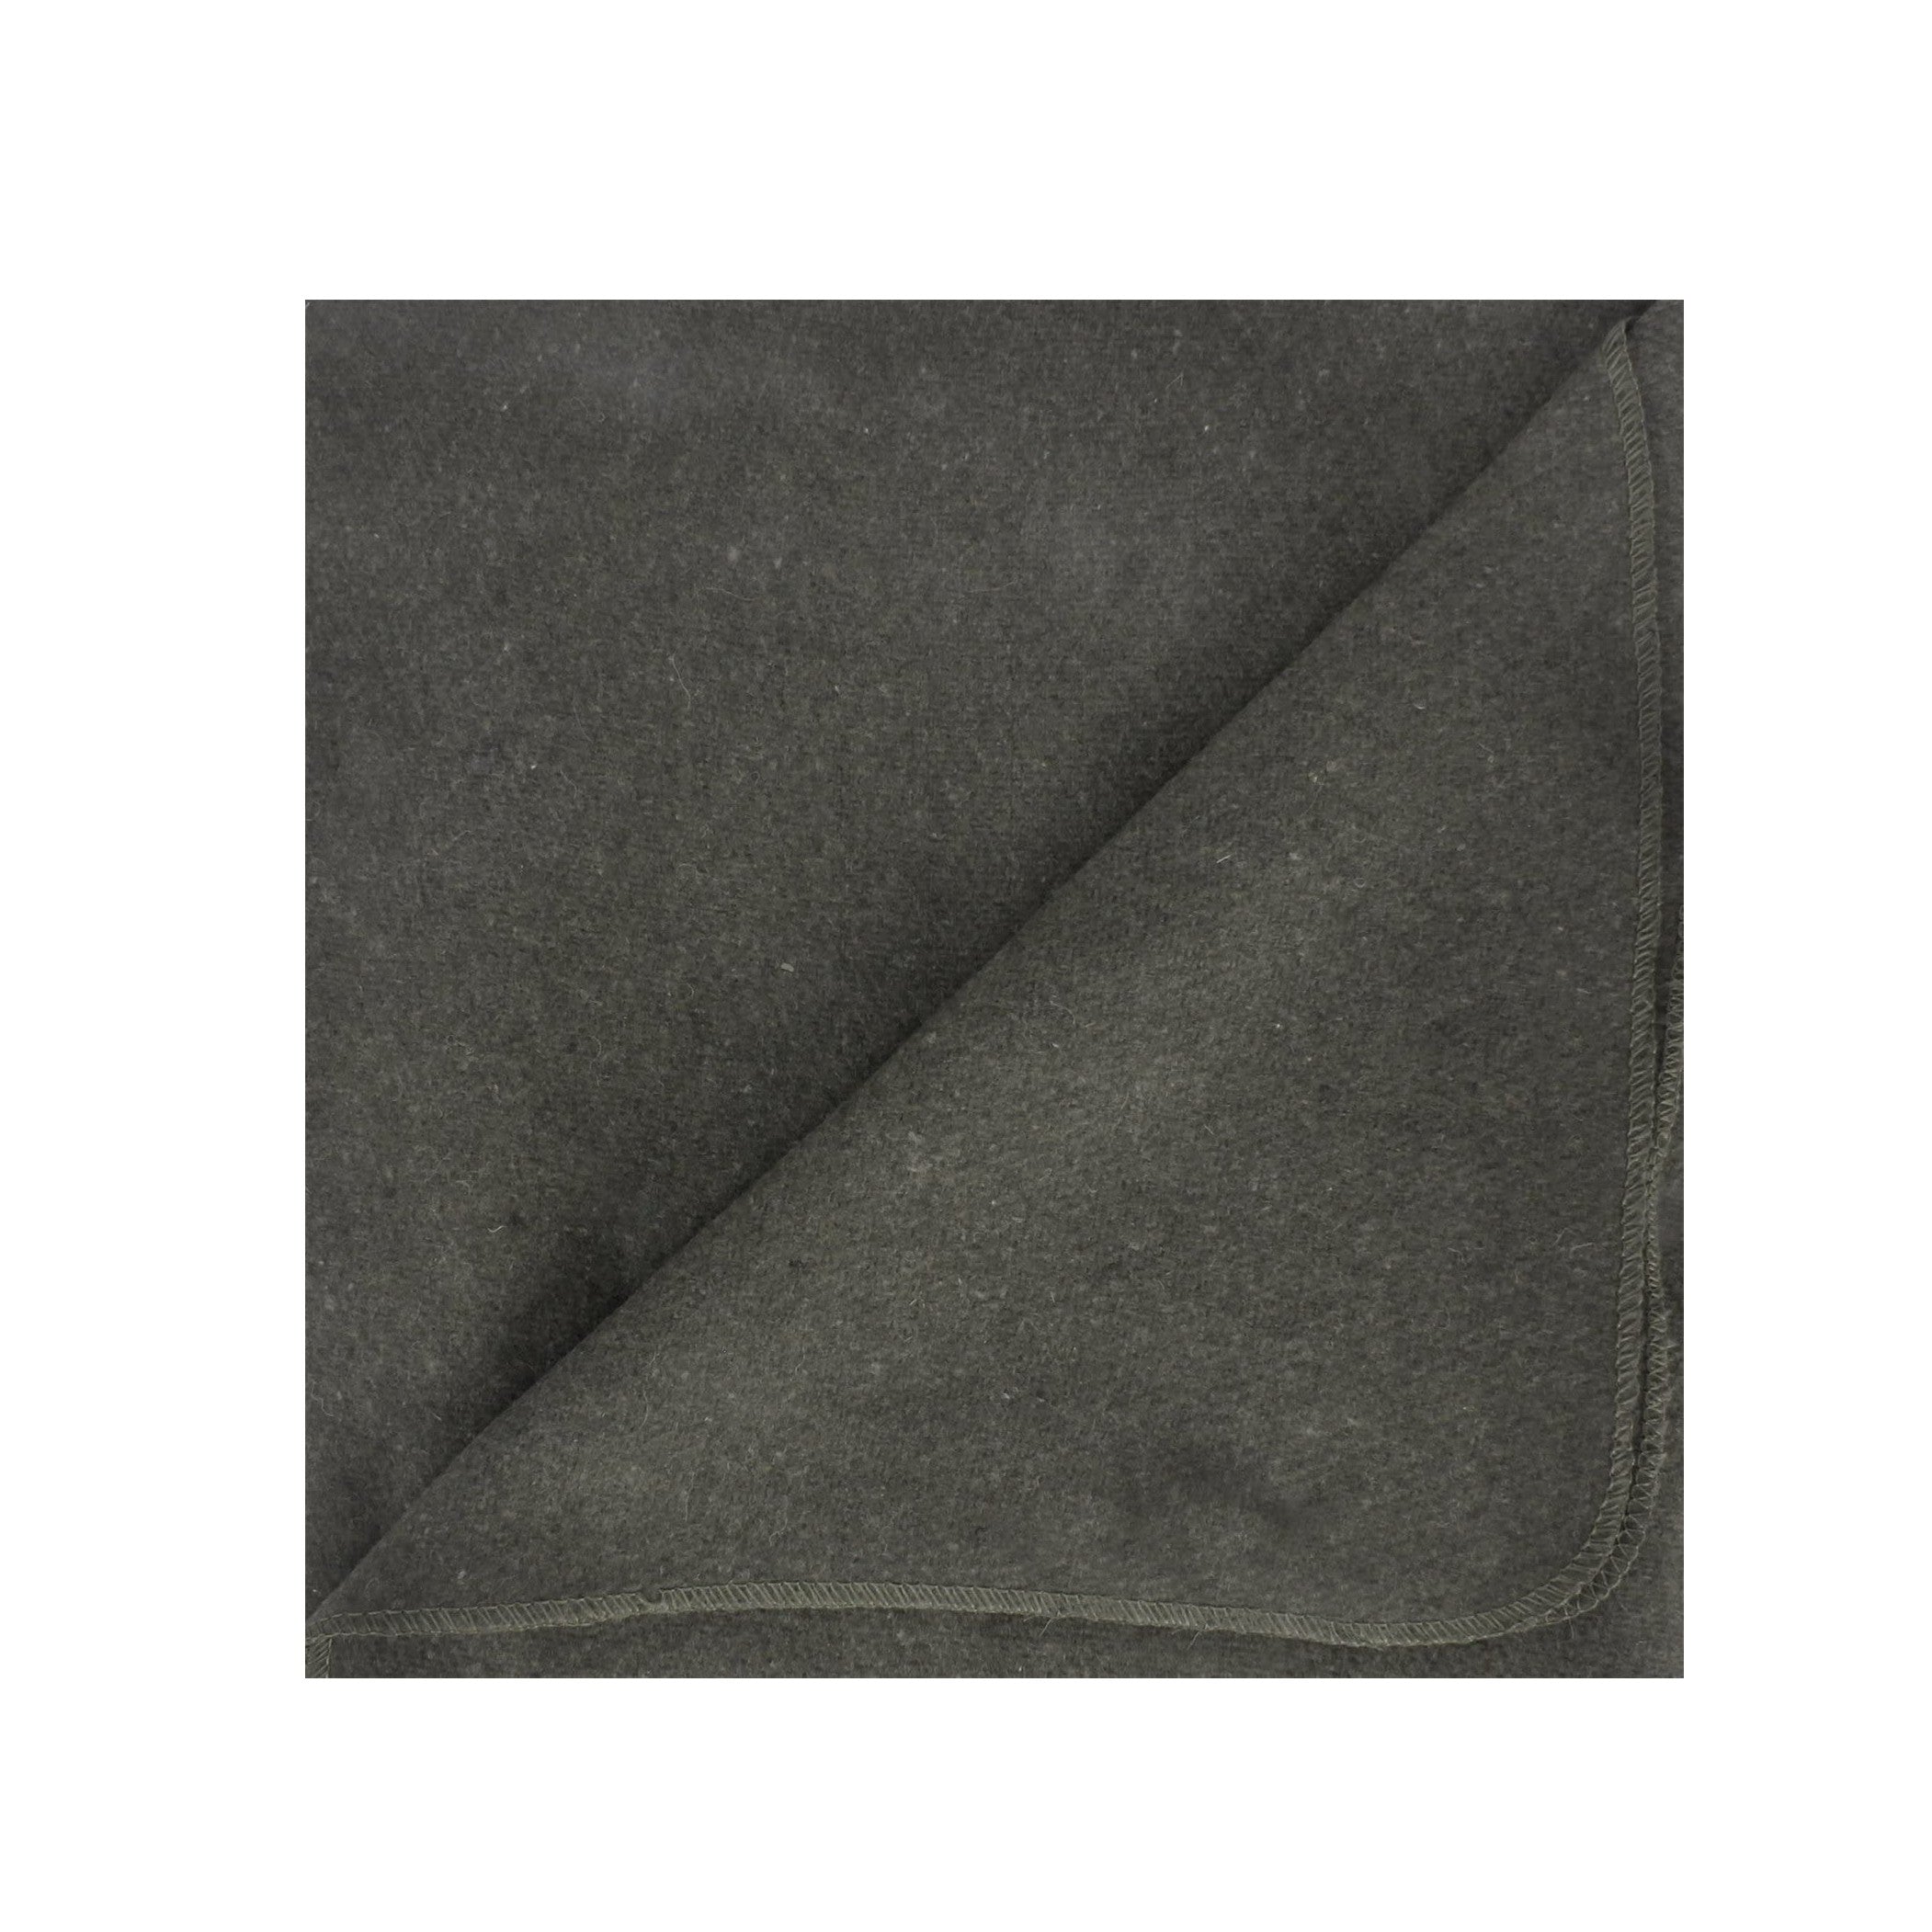 Ever Ready First Aid Fire Retardant Wool Blanket, 66” x 84” – Grey